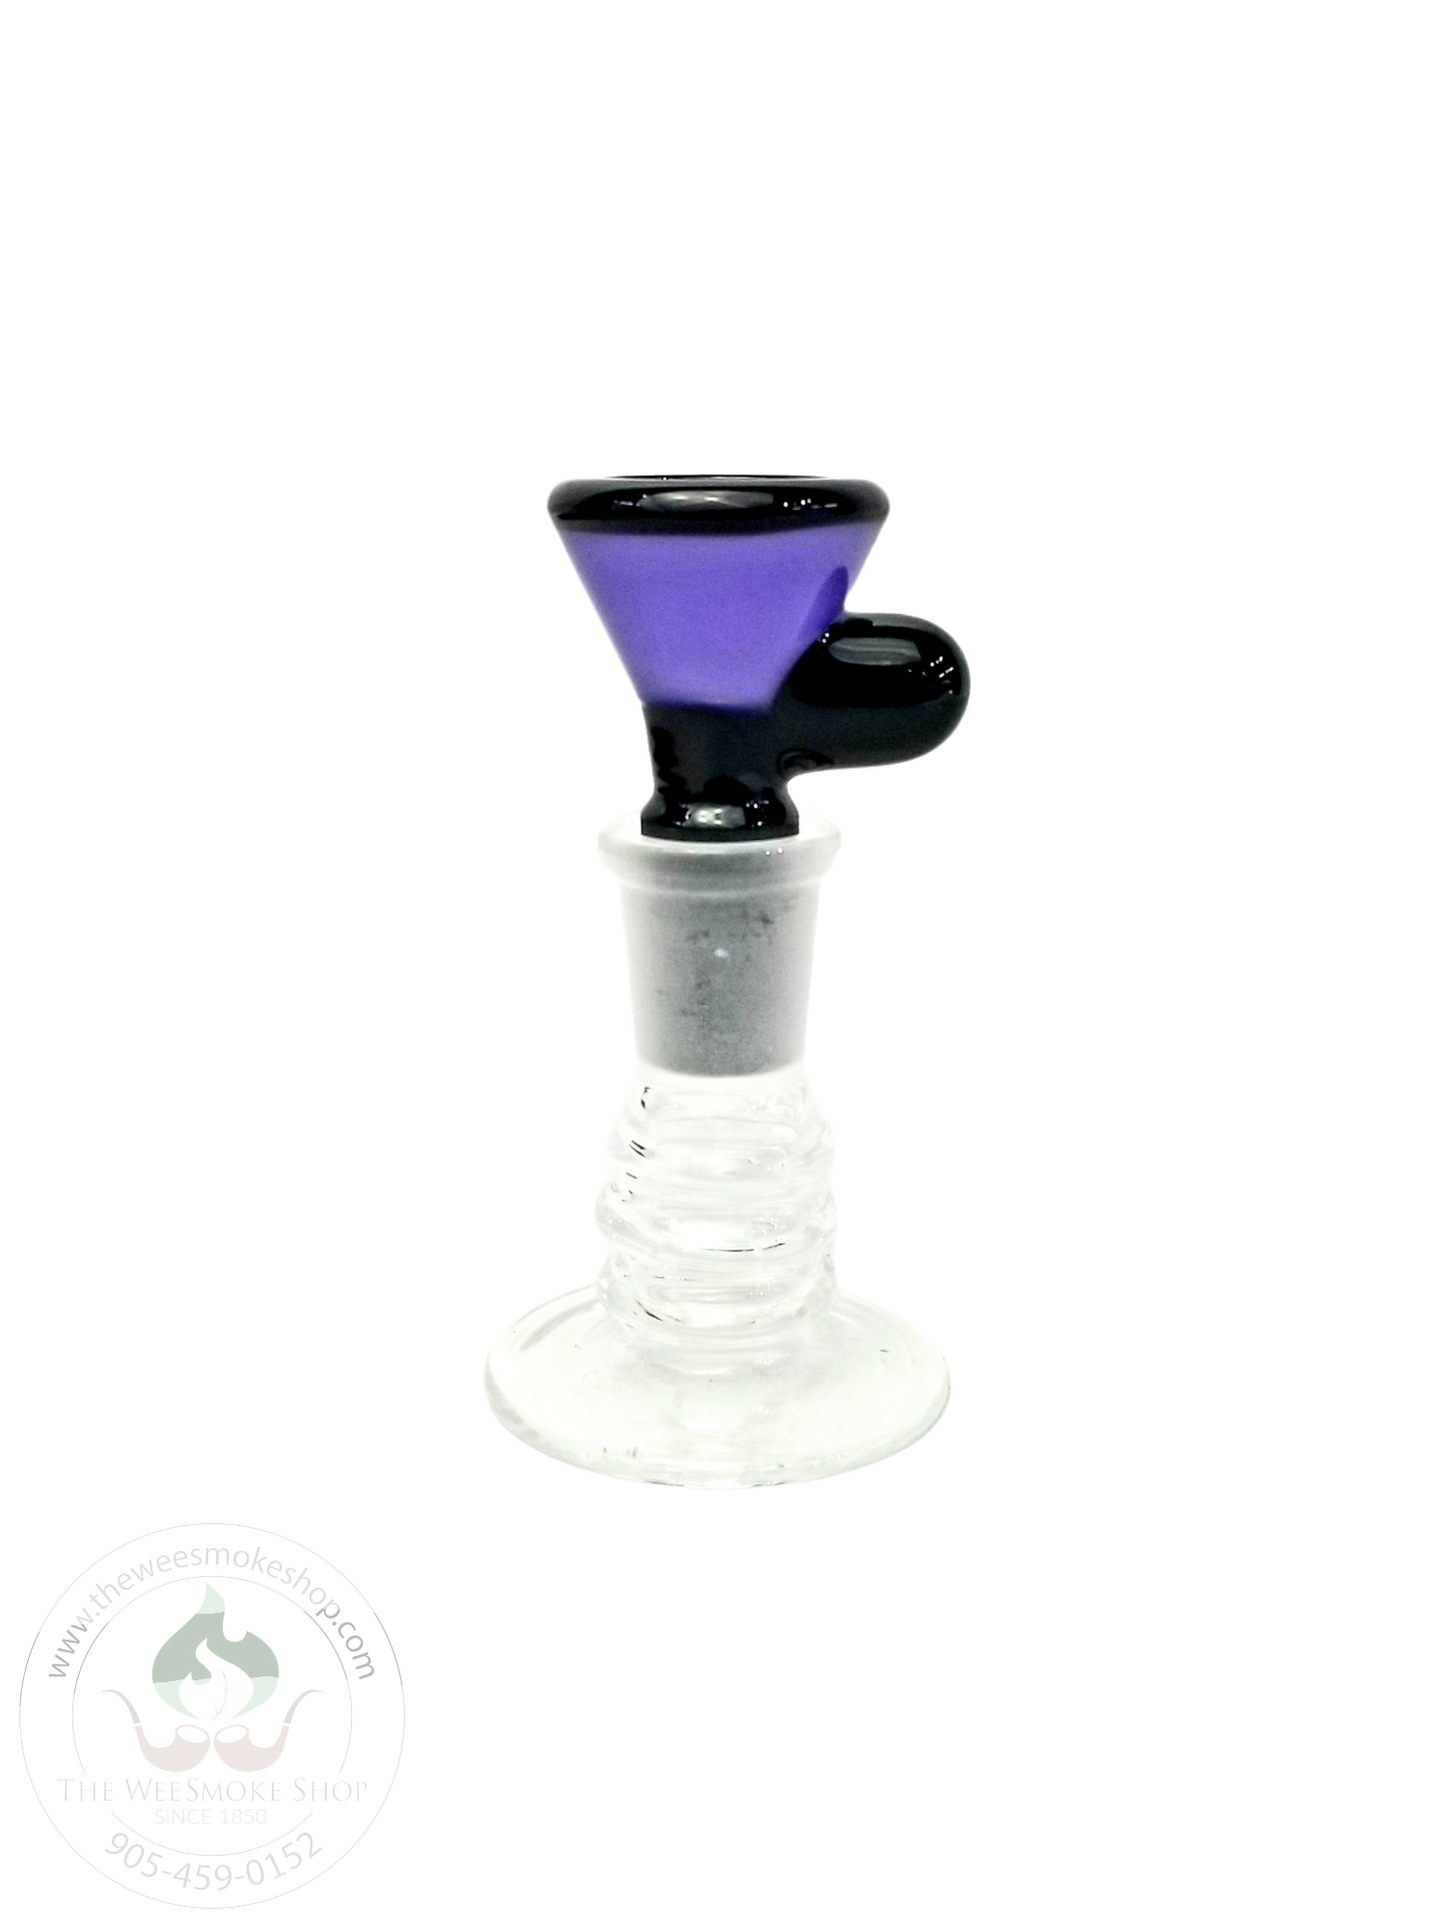 Cheech Solid Colour Stripe (14mm) Bowl-Purple-The Wee Smoke Shop